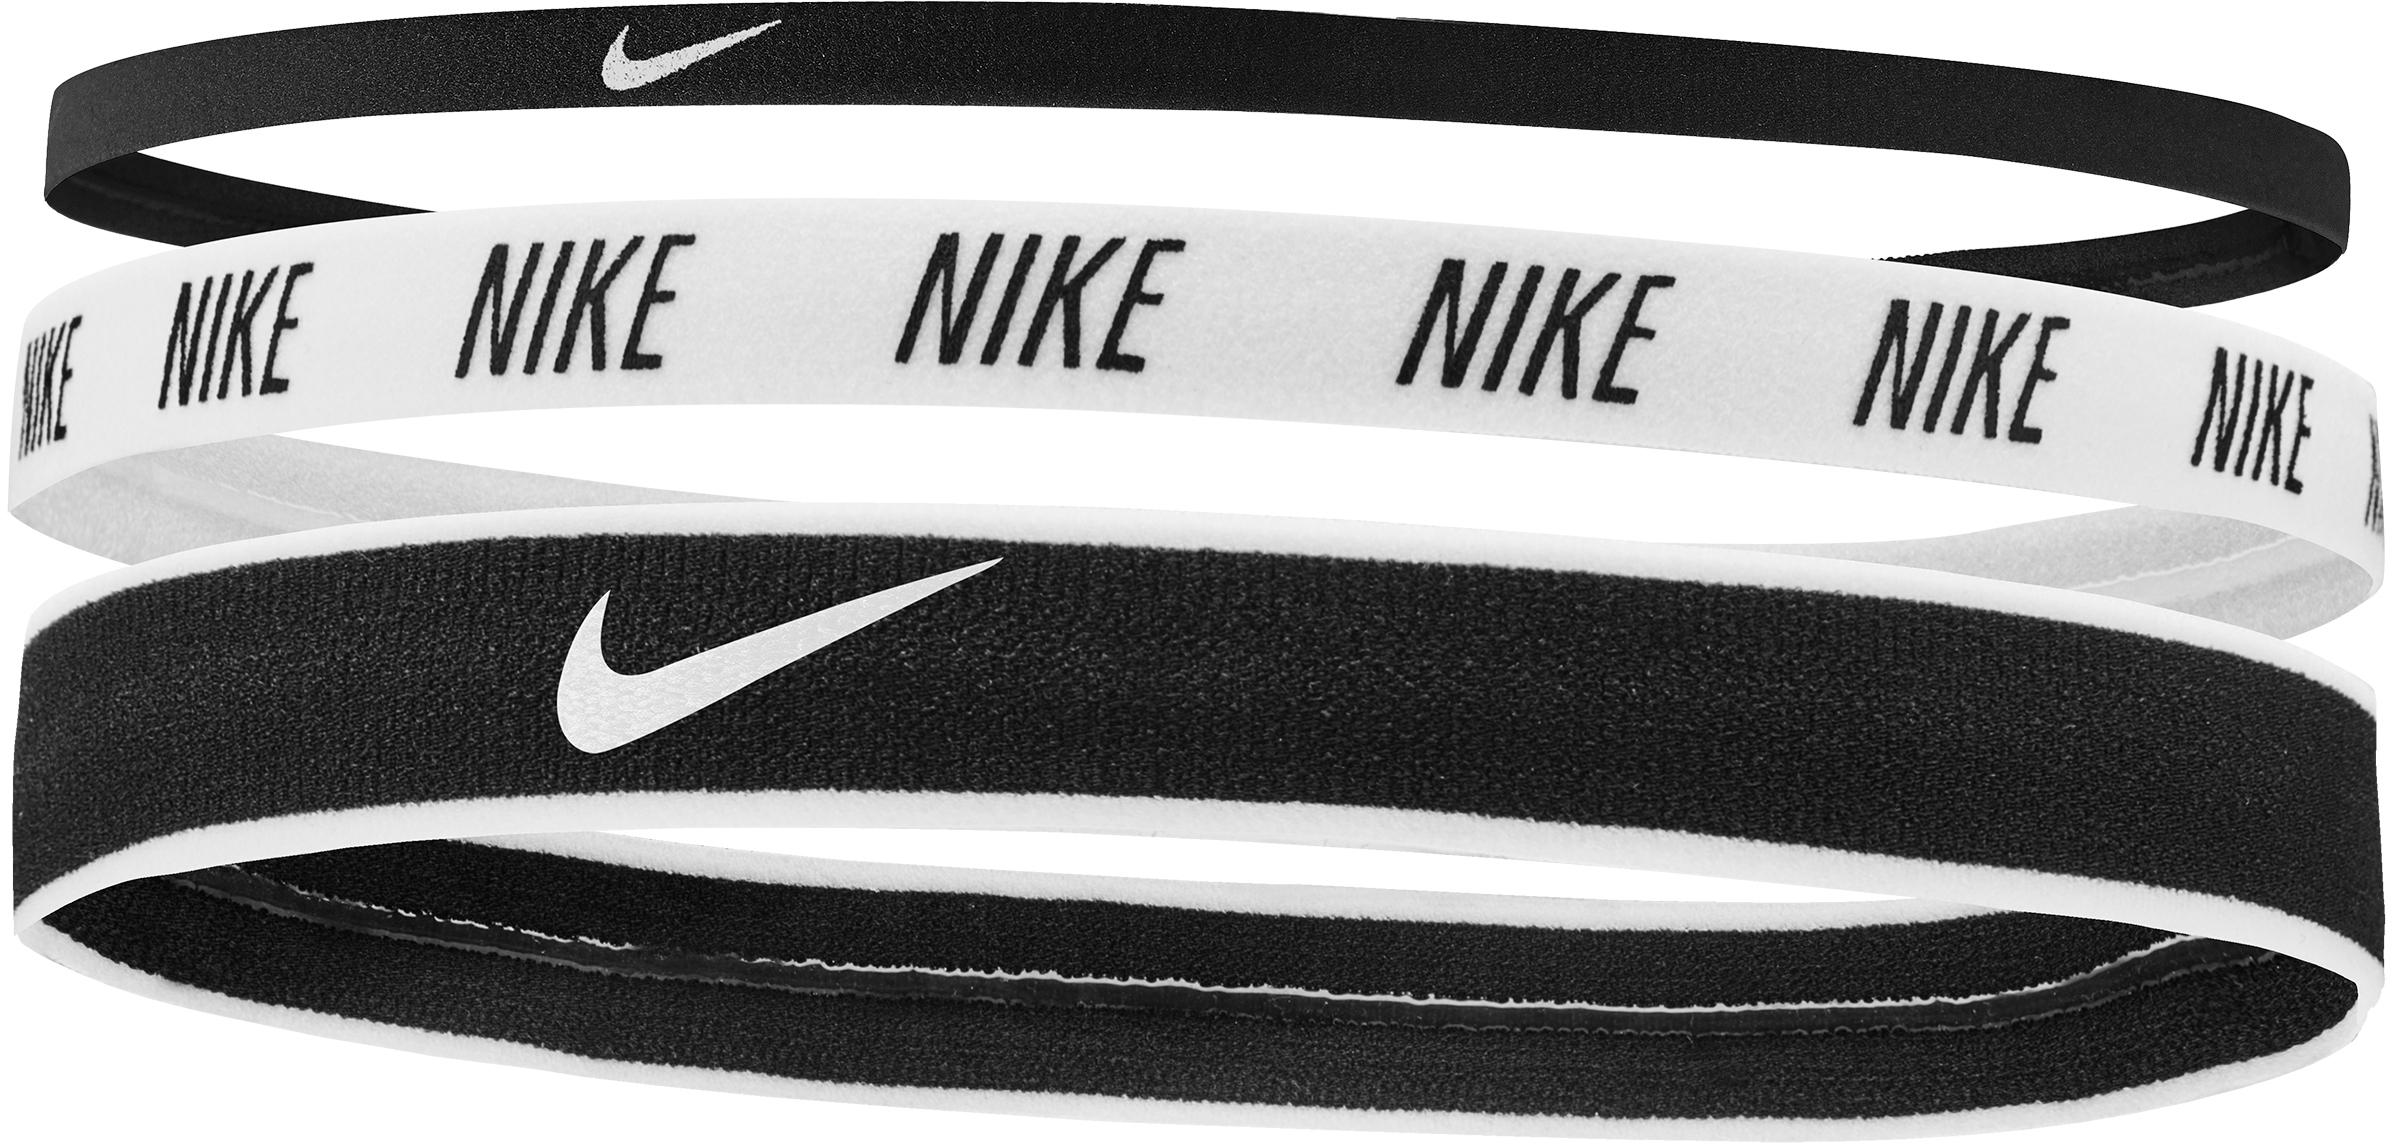 Nike Mixed Width Headbands 3 Pack - Black/white/black